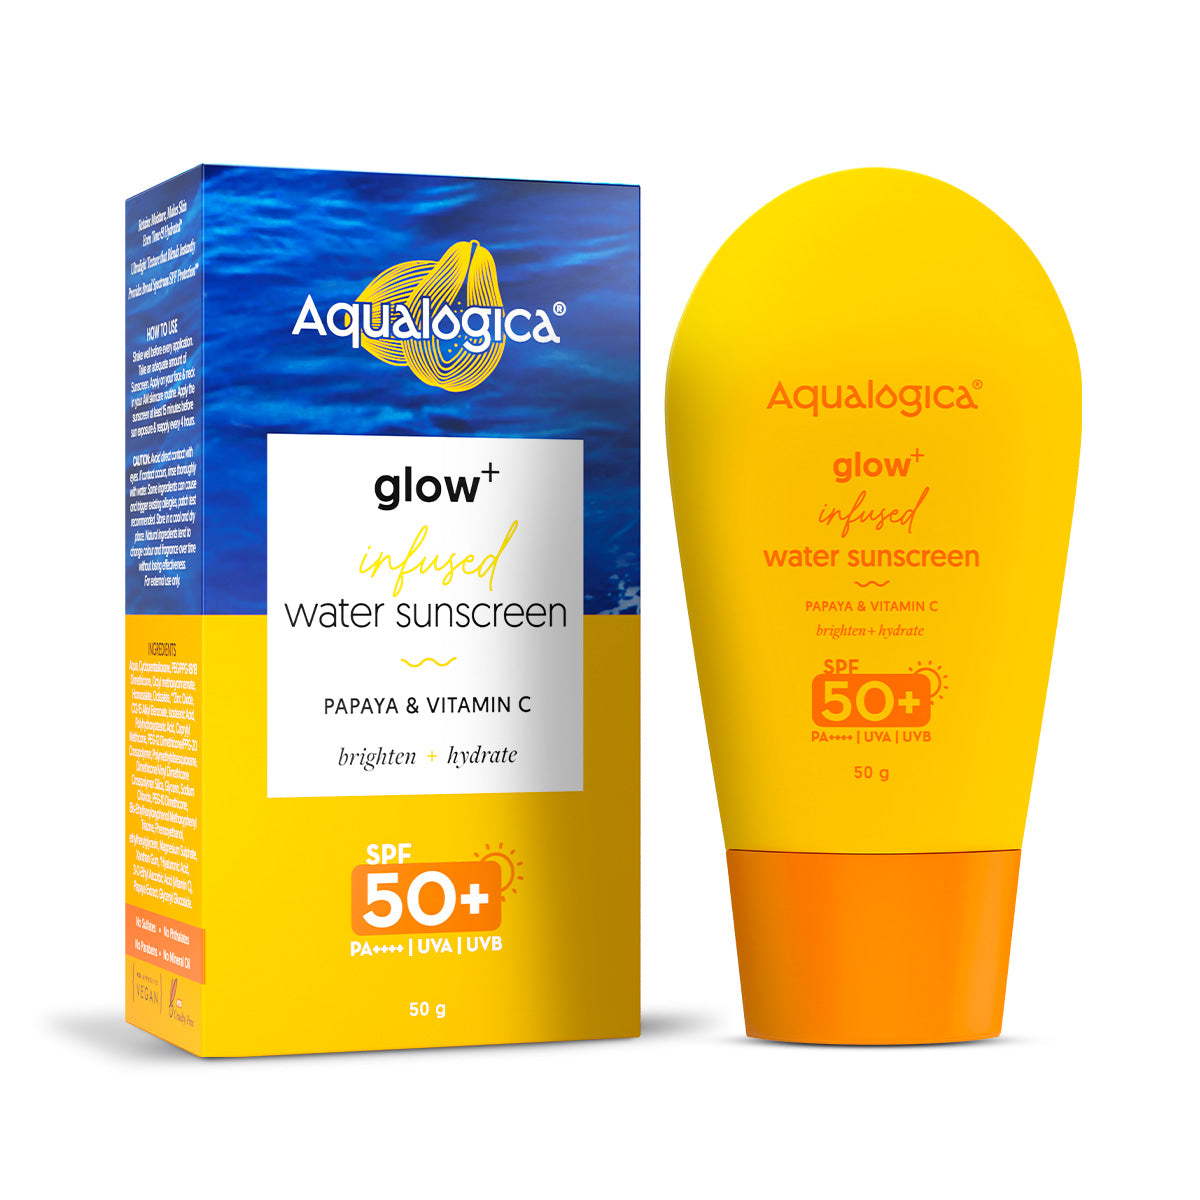 Glow+ Infused Water Sunscreen with Papaya & Vitamin C